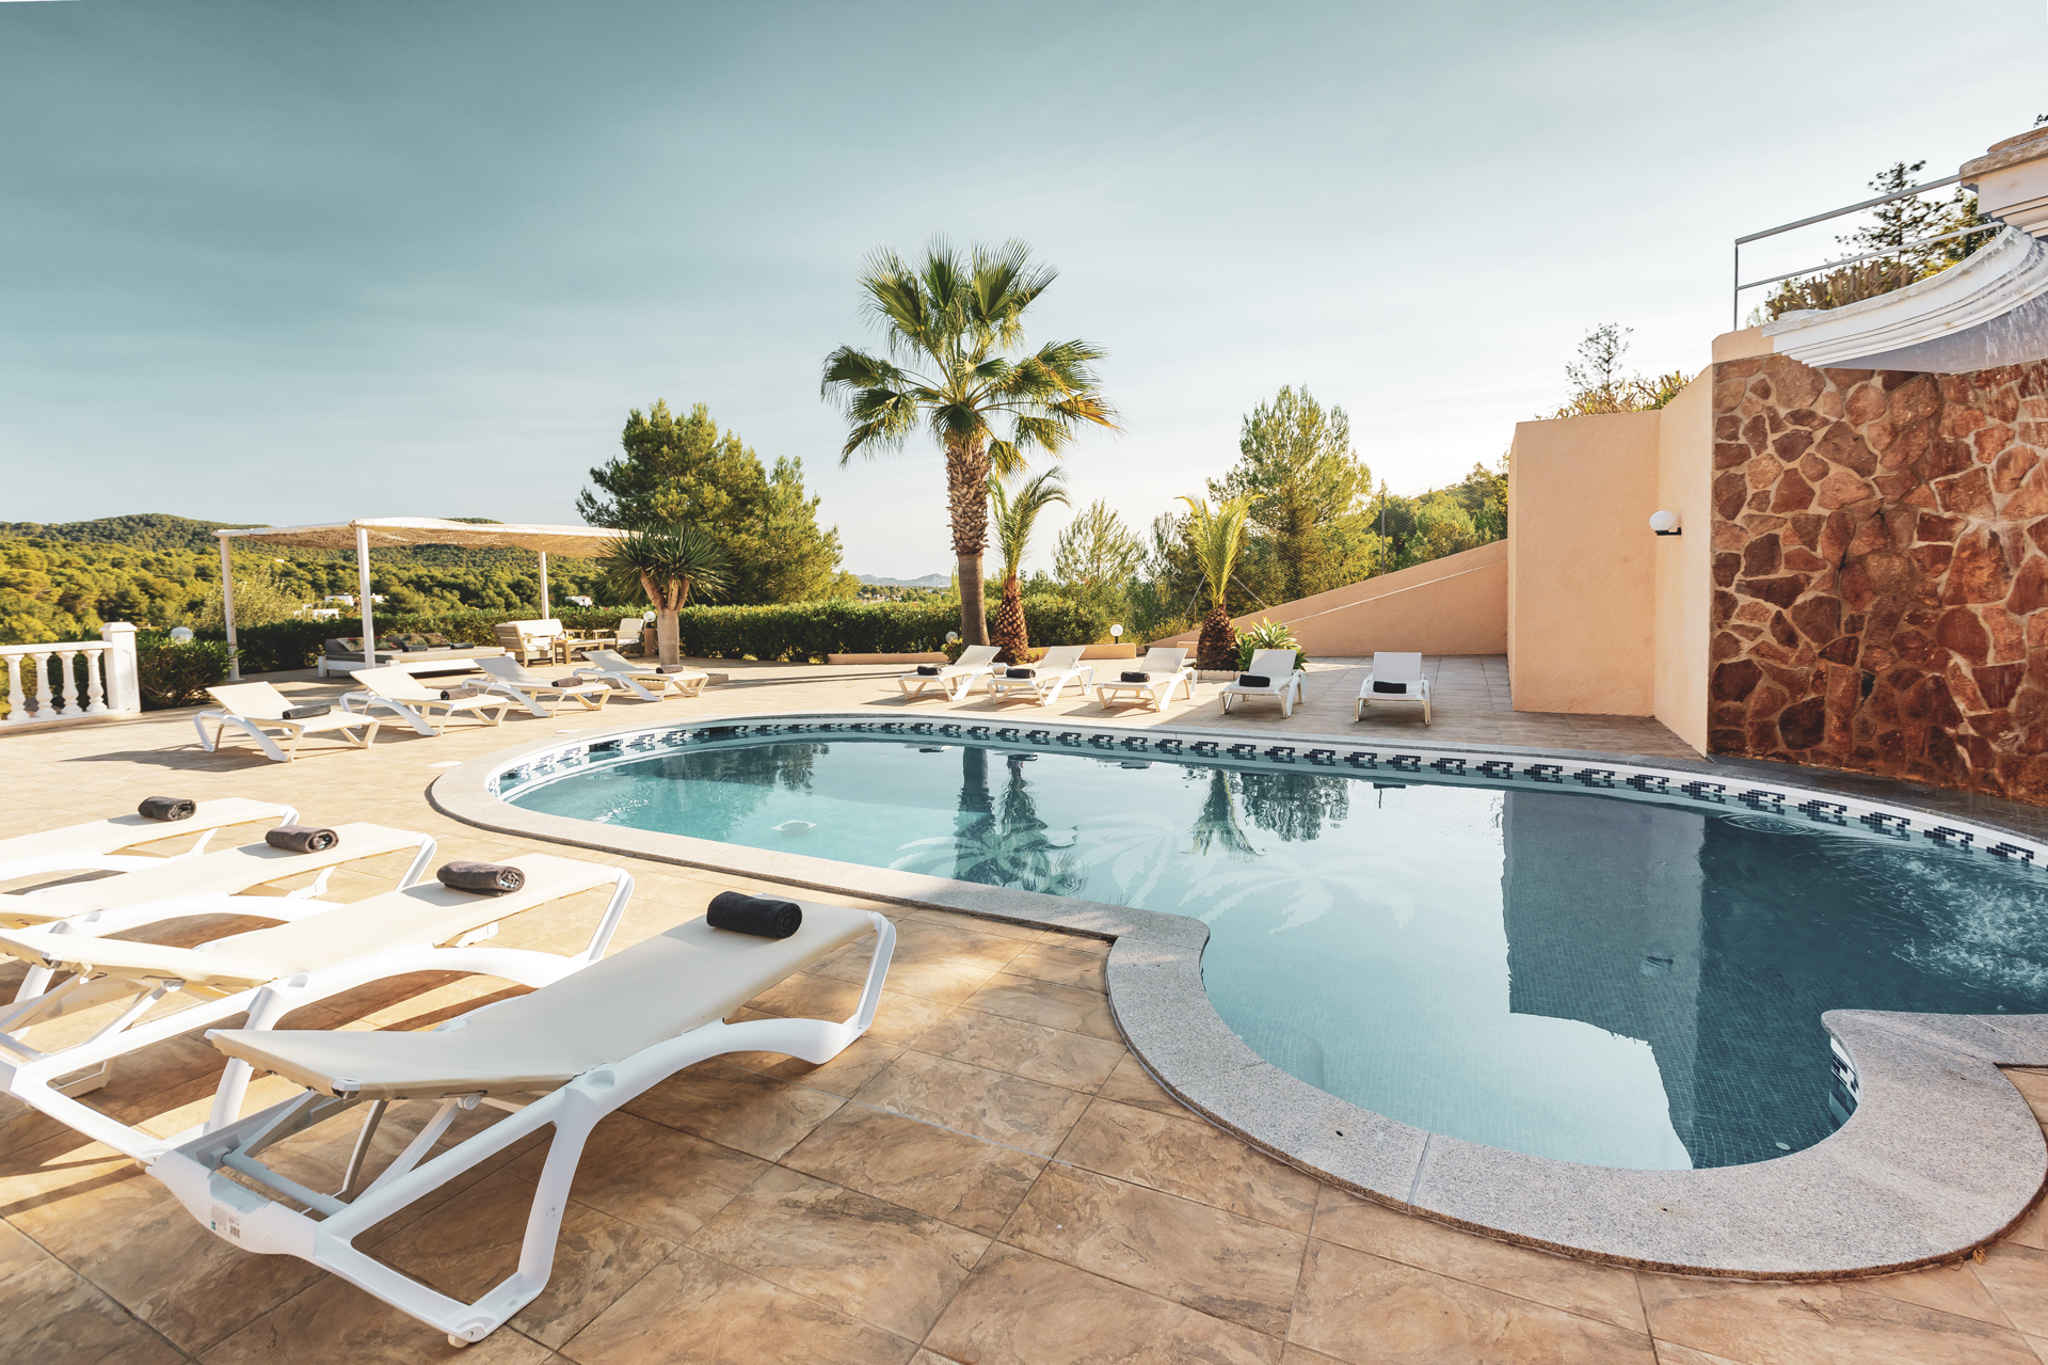 Villas in Ibiza that sleep 10 people